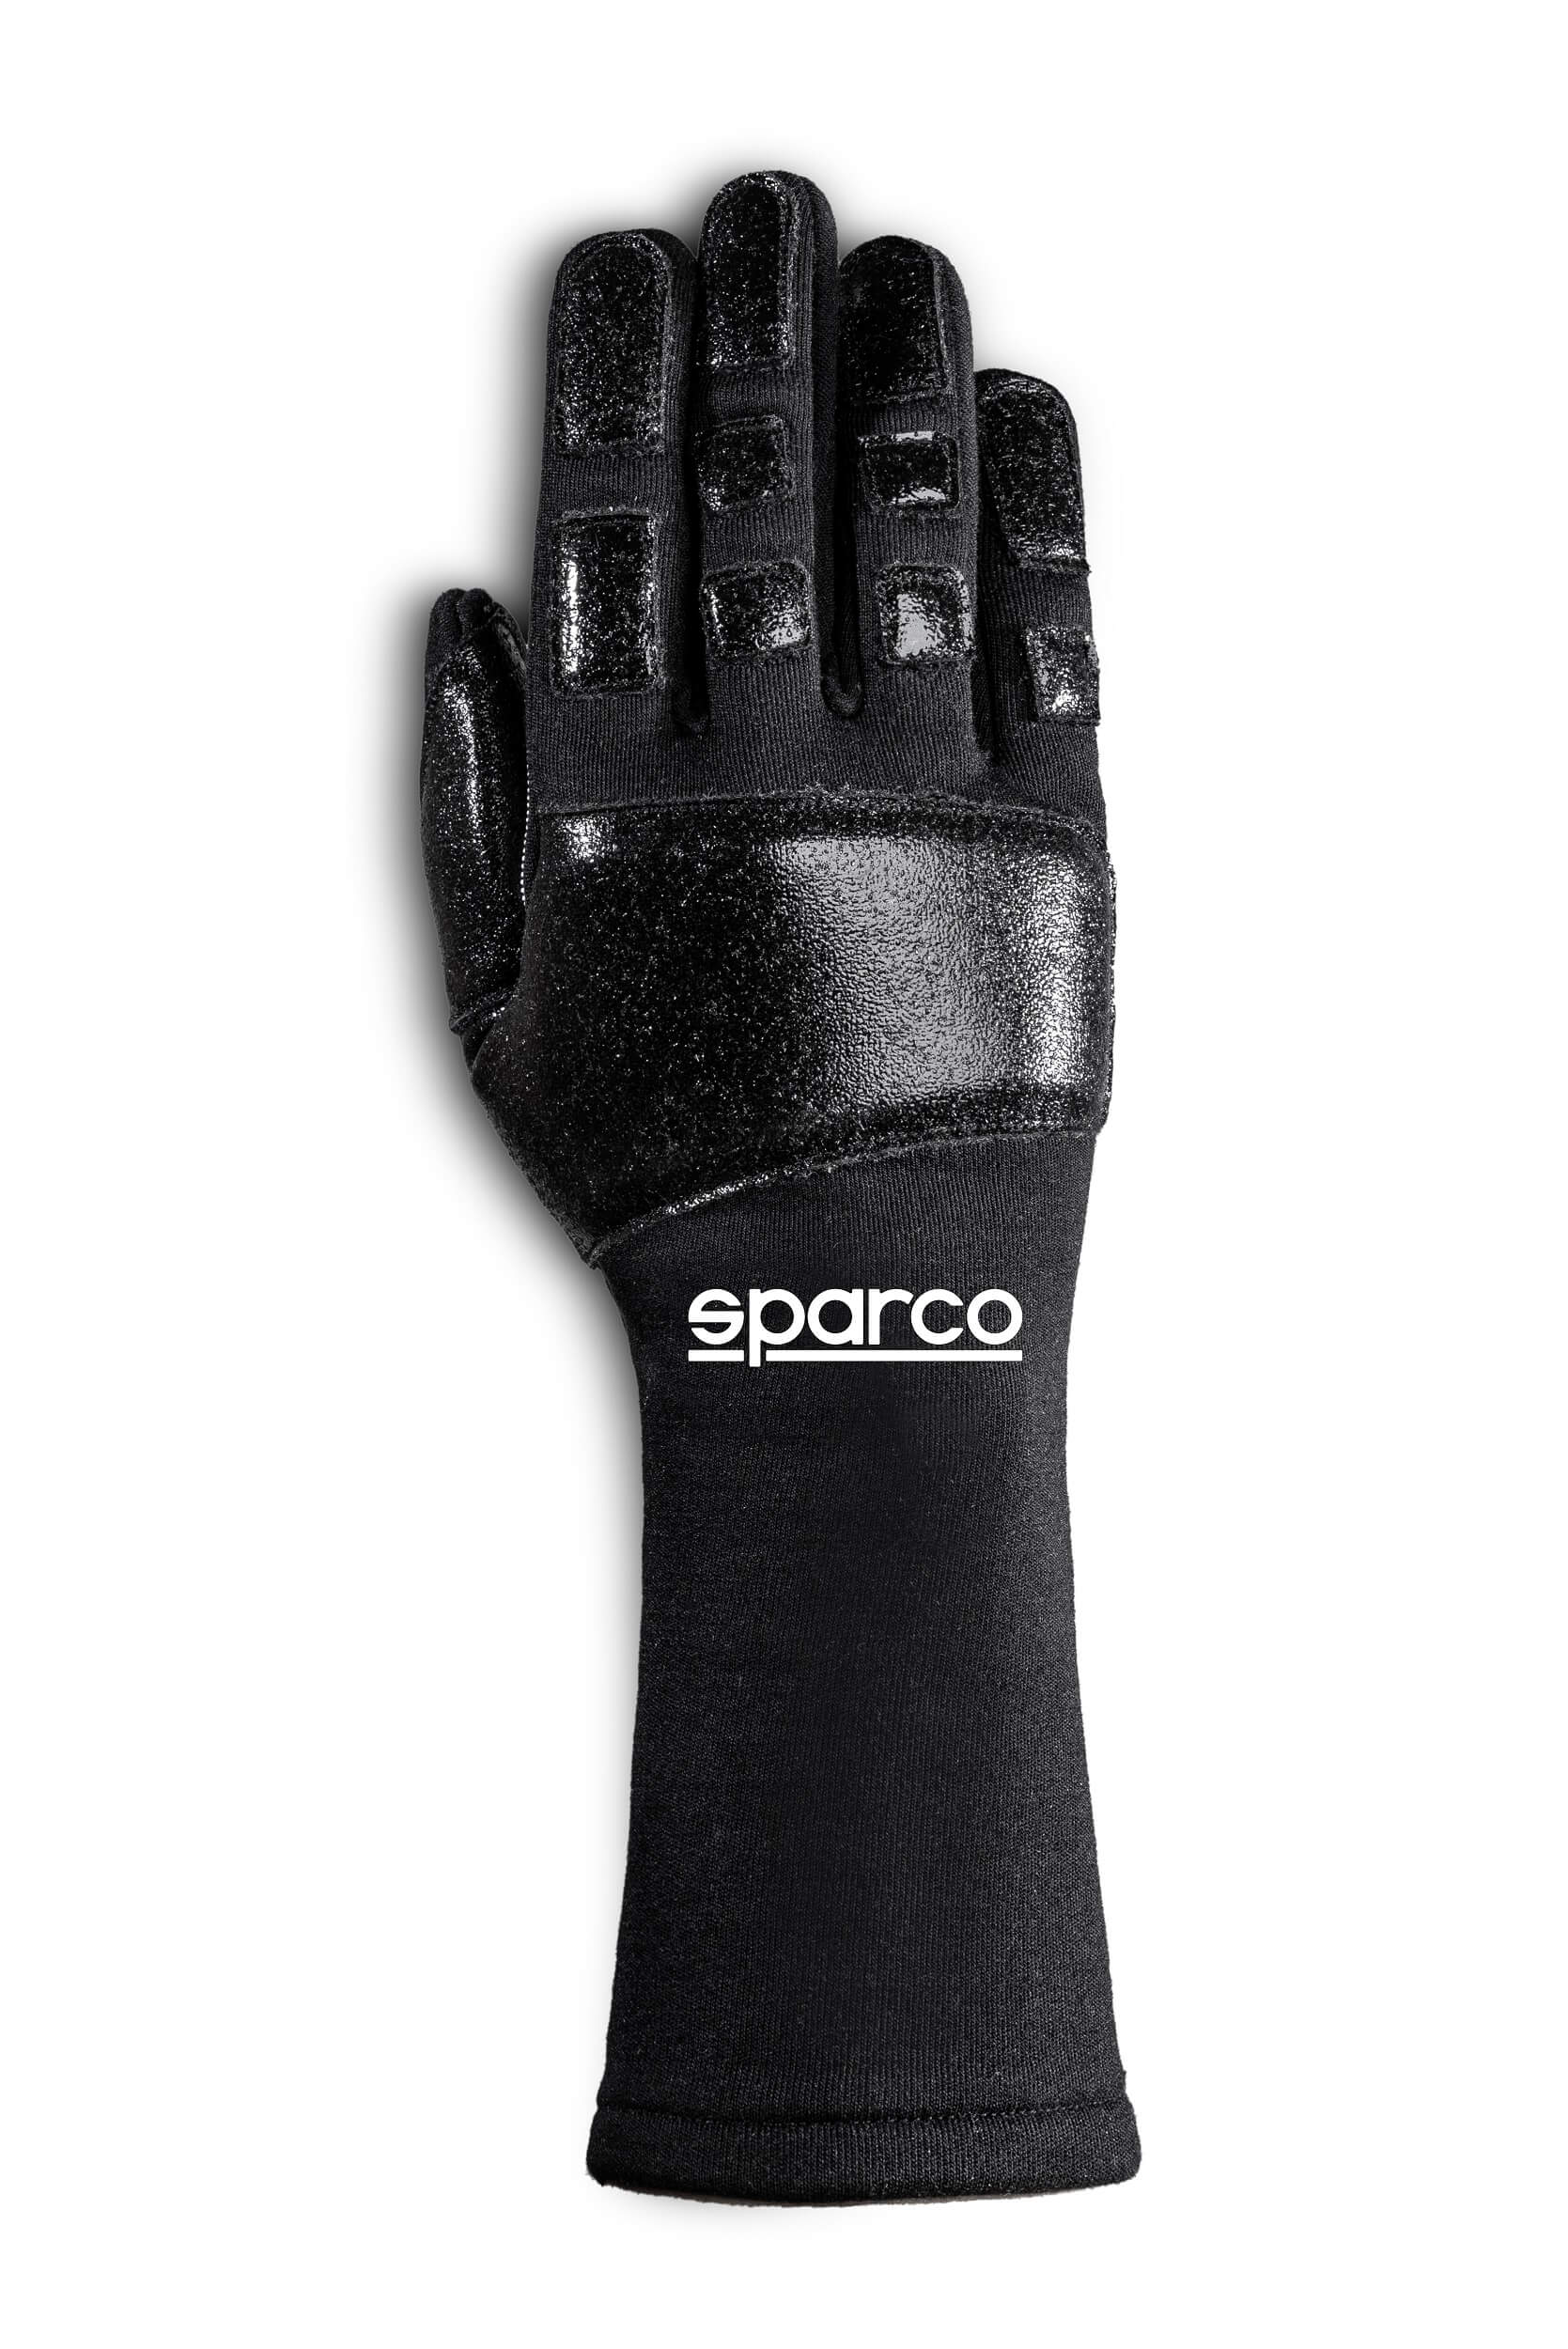 SPARCO 00131809NR TIDE MECA Gloves, NOT FIA, black, size 9 Photo-0 